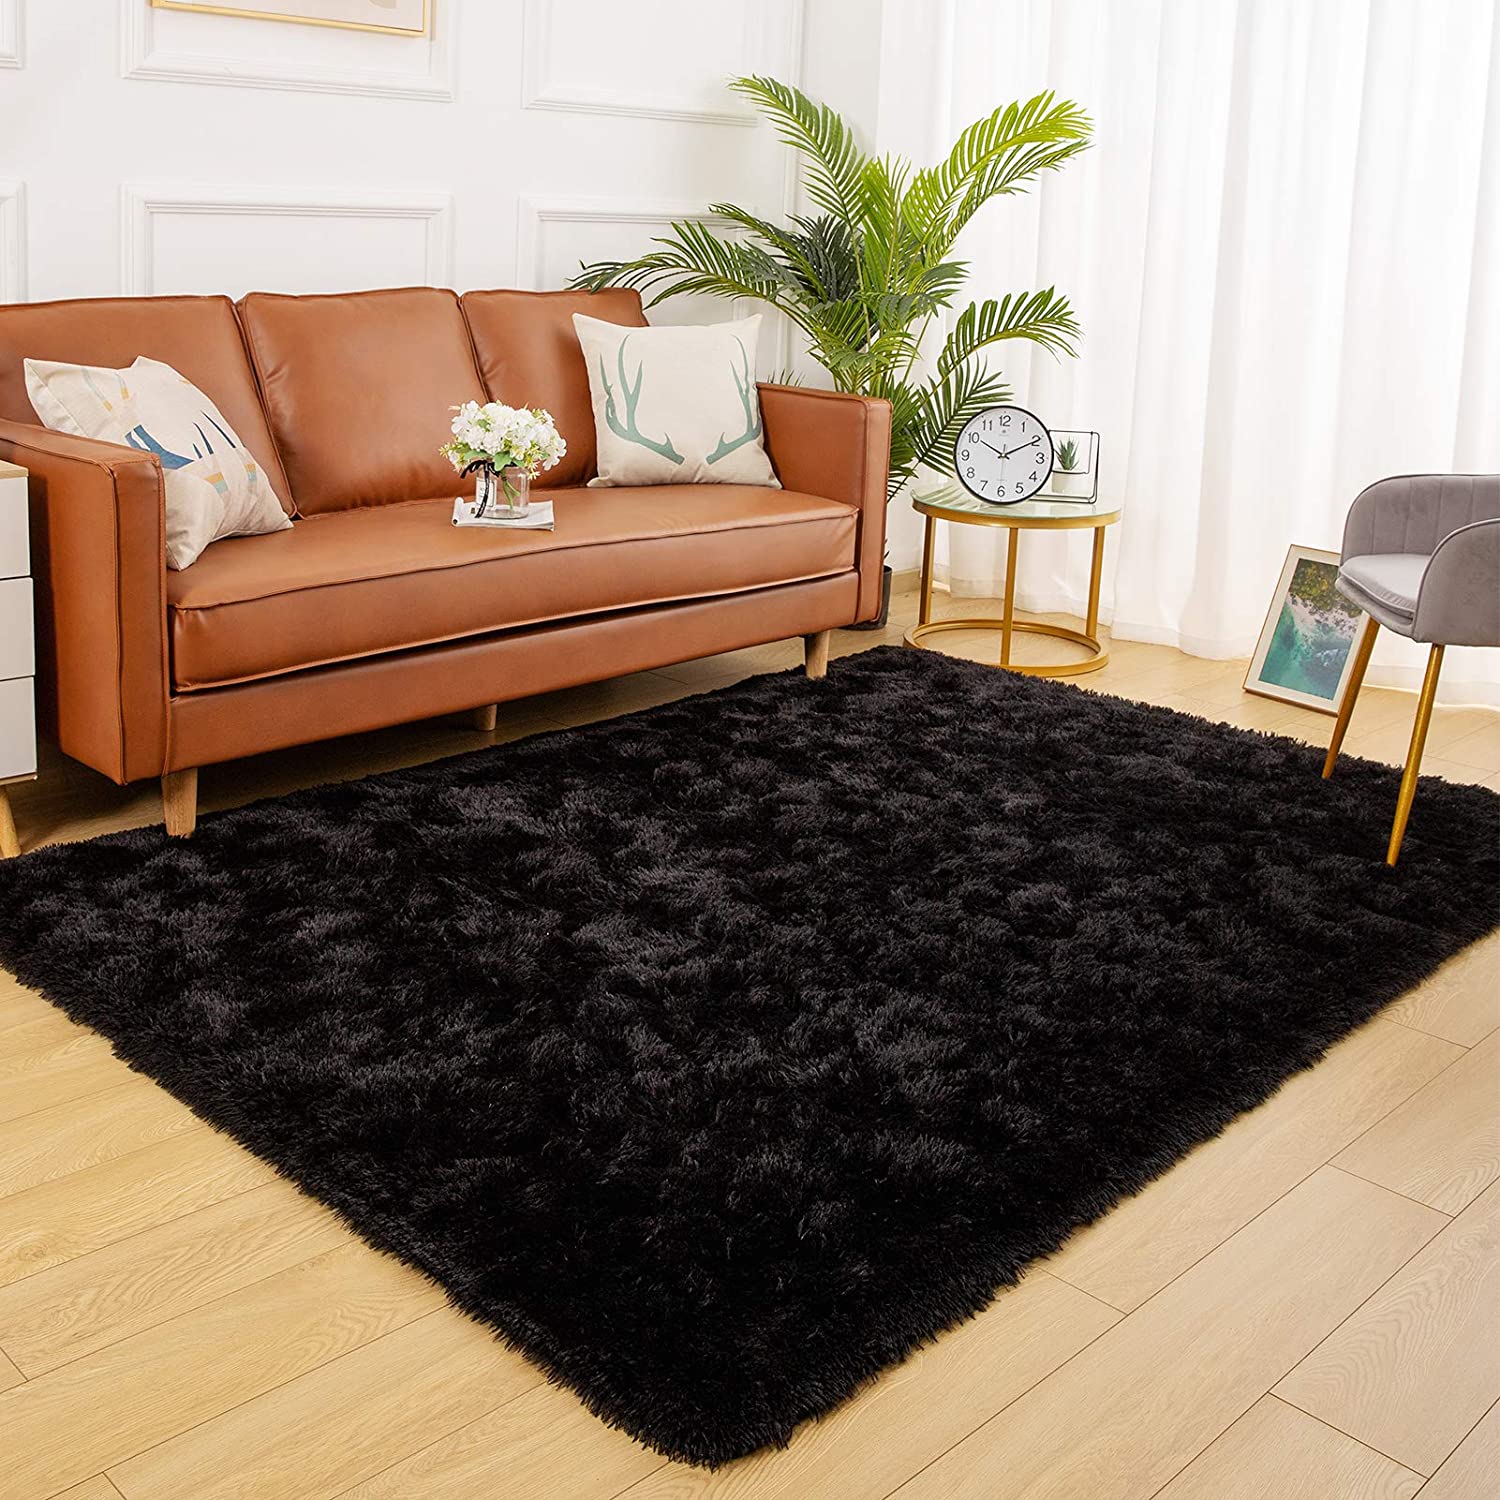 YJ.GWL Soft Shaggy Area Rugs for Bedroom Fluffy Living Room Rugs Nursery Girls Carpet